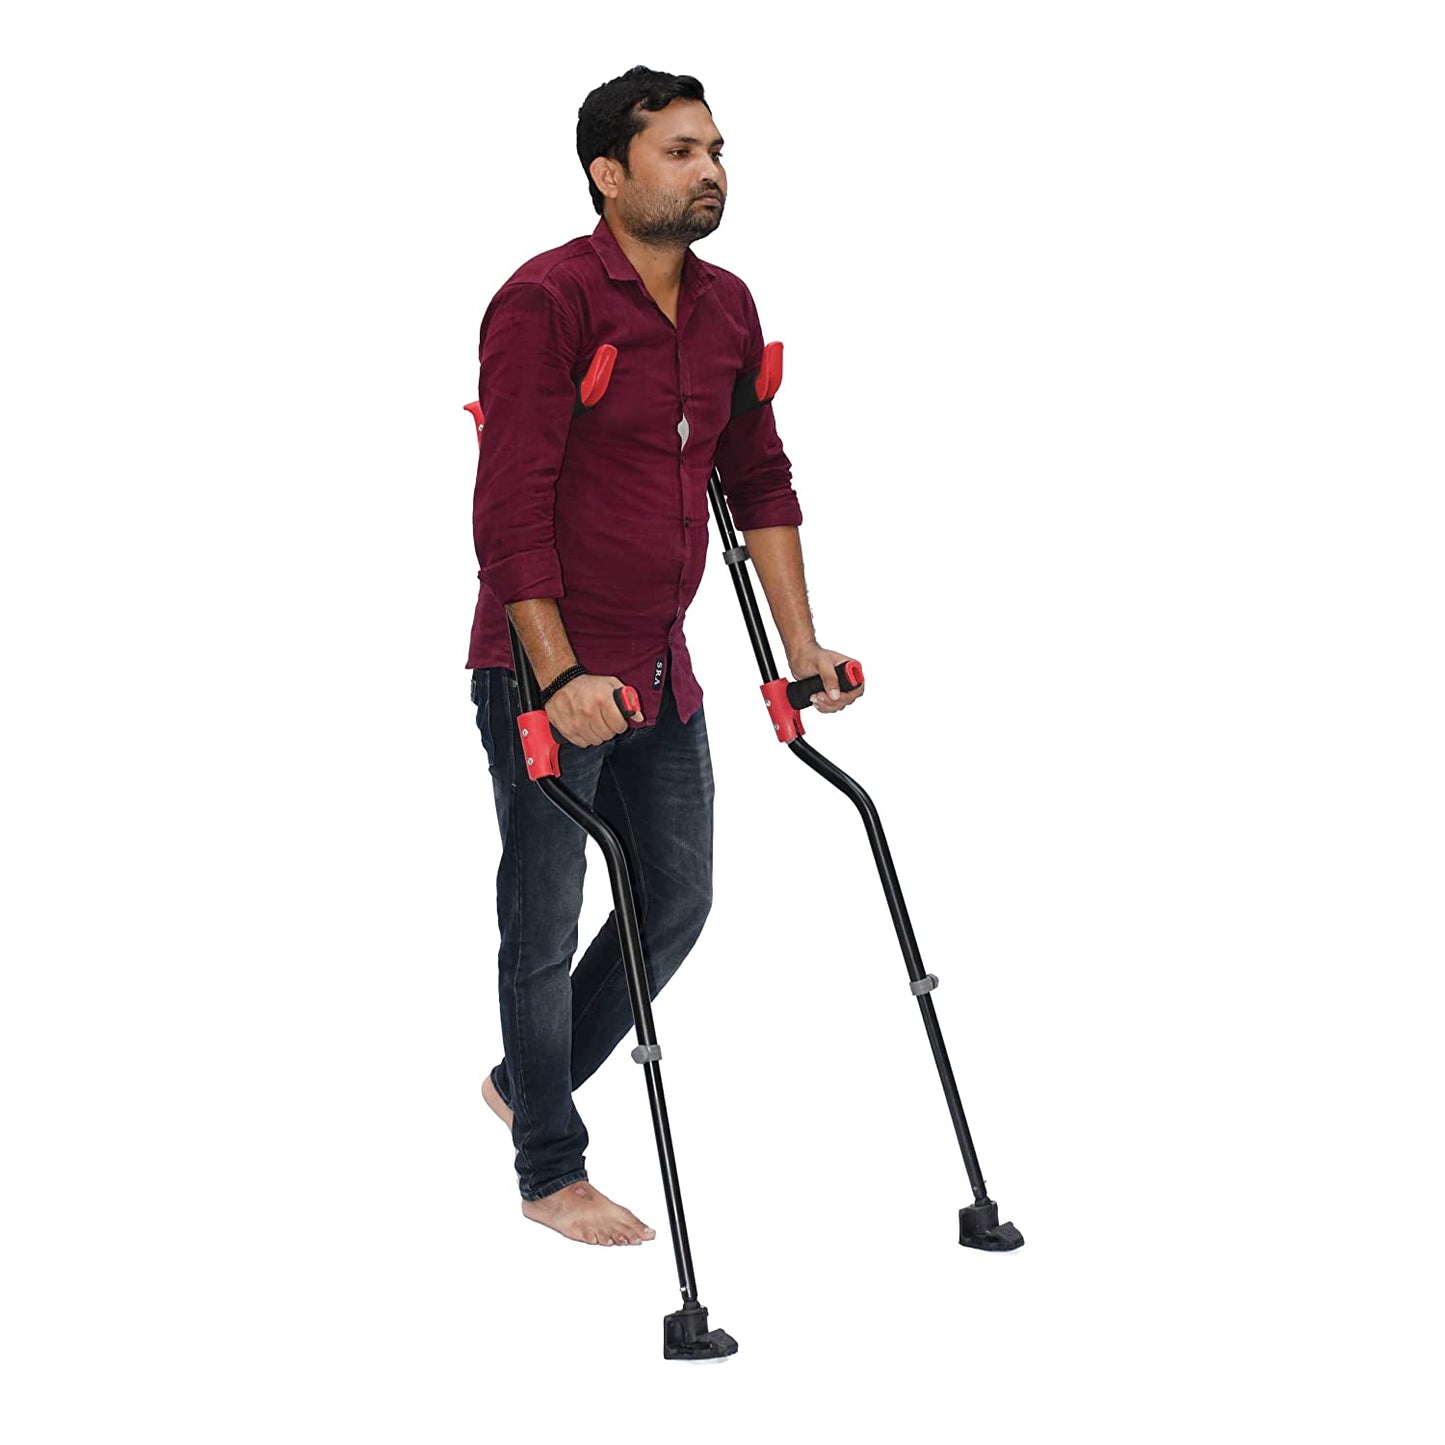 Underarm Crutches Adult Size - Flexmo